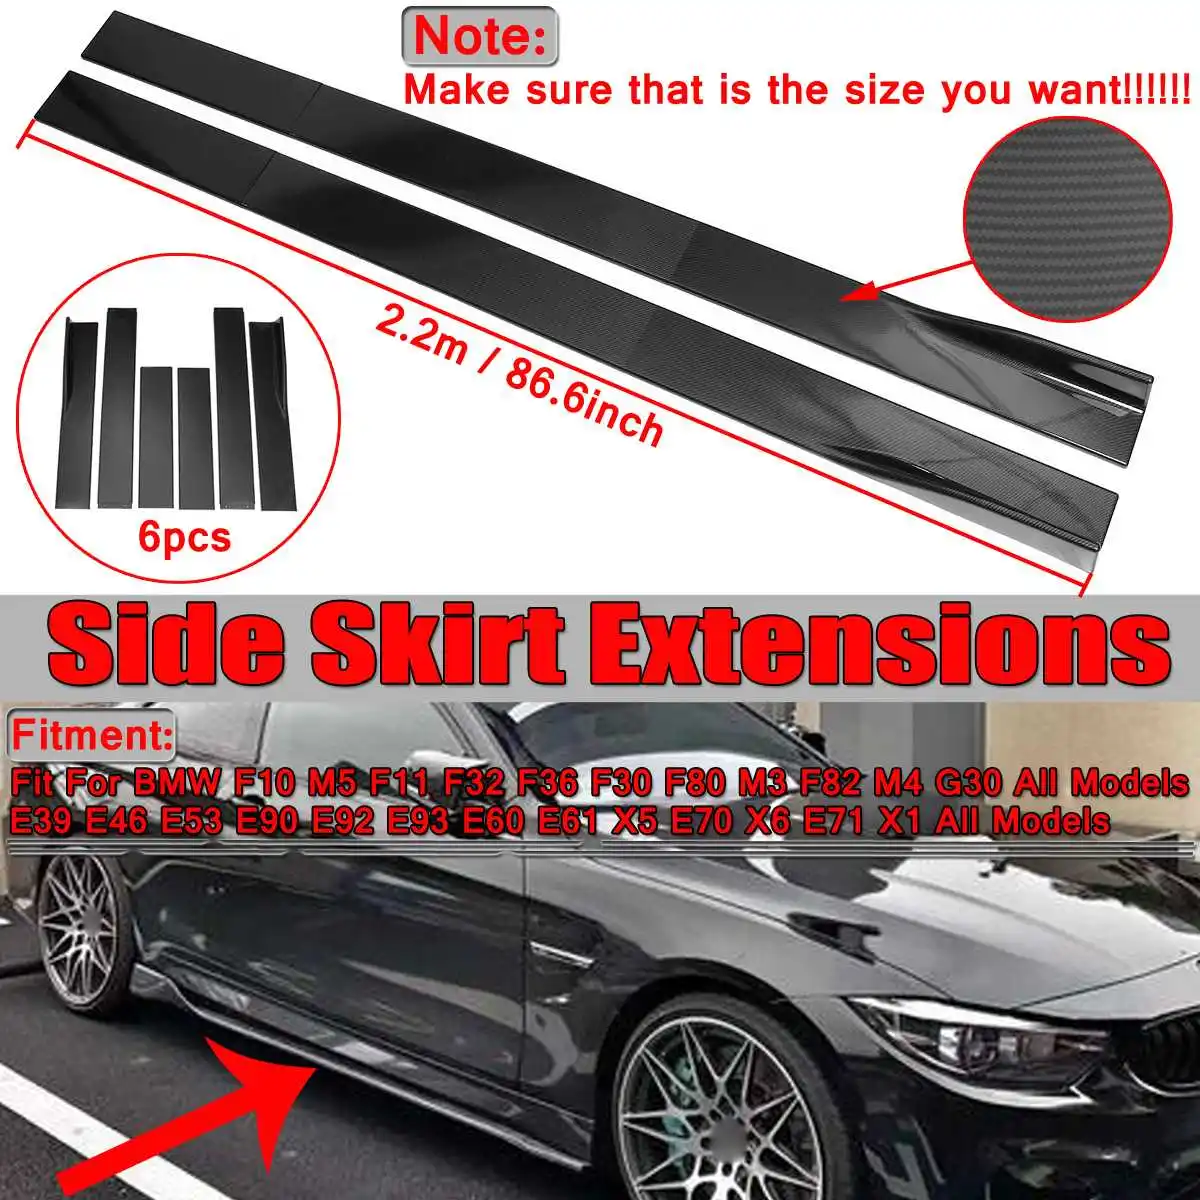 2.2m Carbon Fiber Look Universal Car Side Skirt Winglet Extensions Rocker Splitters For BMW F30 F80 F82 M4 F32 F36 E90 E92 F10 Color : Black 